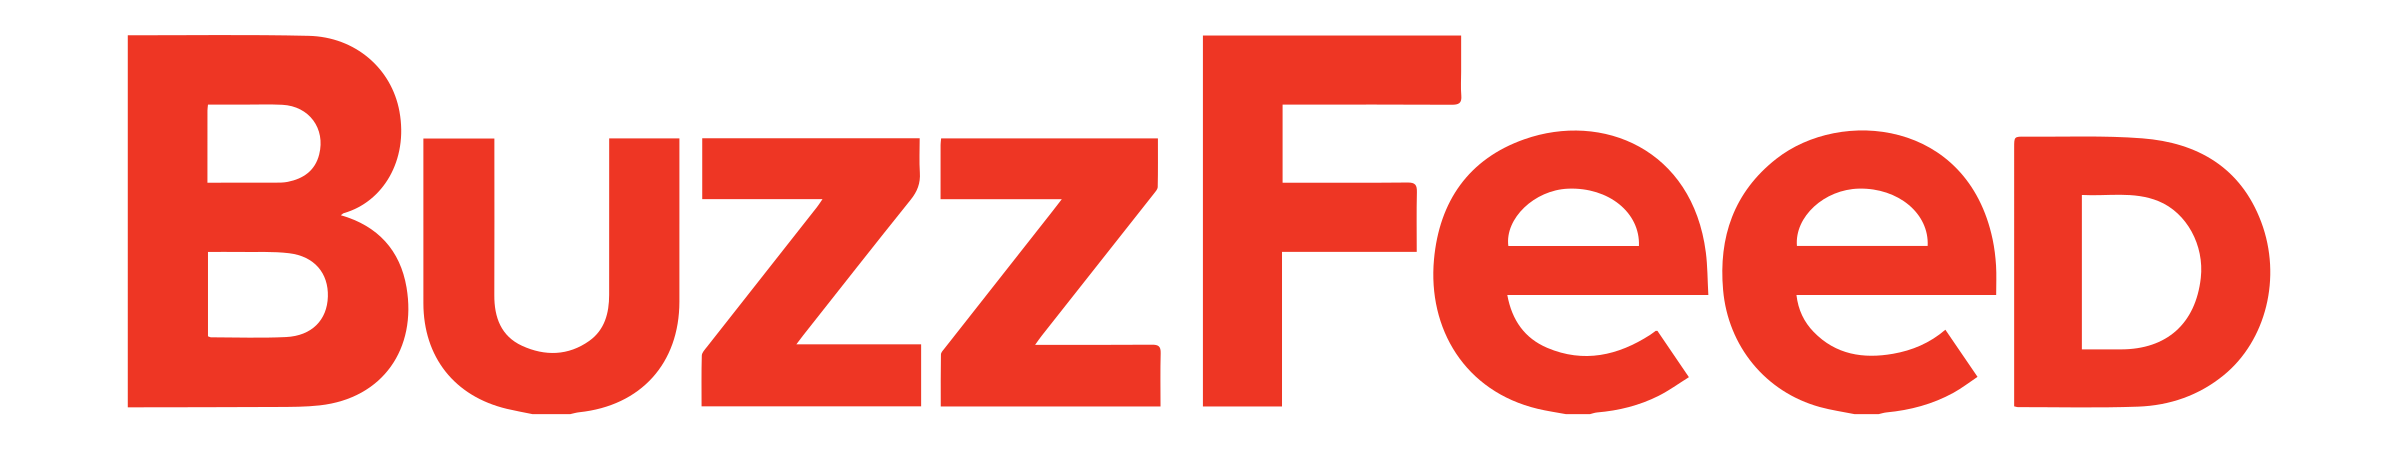 Buzzfeed Logo.png